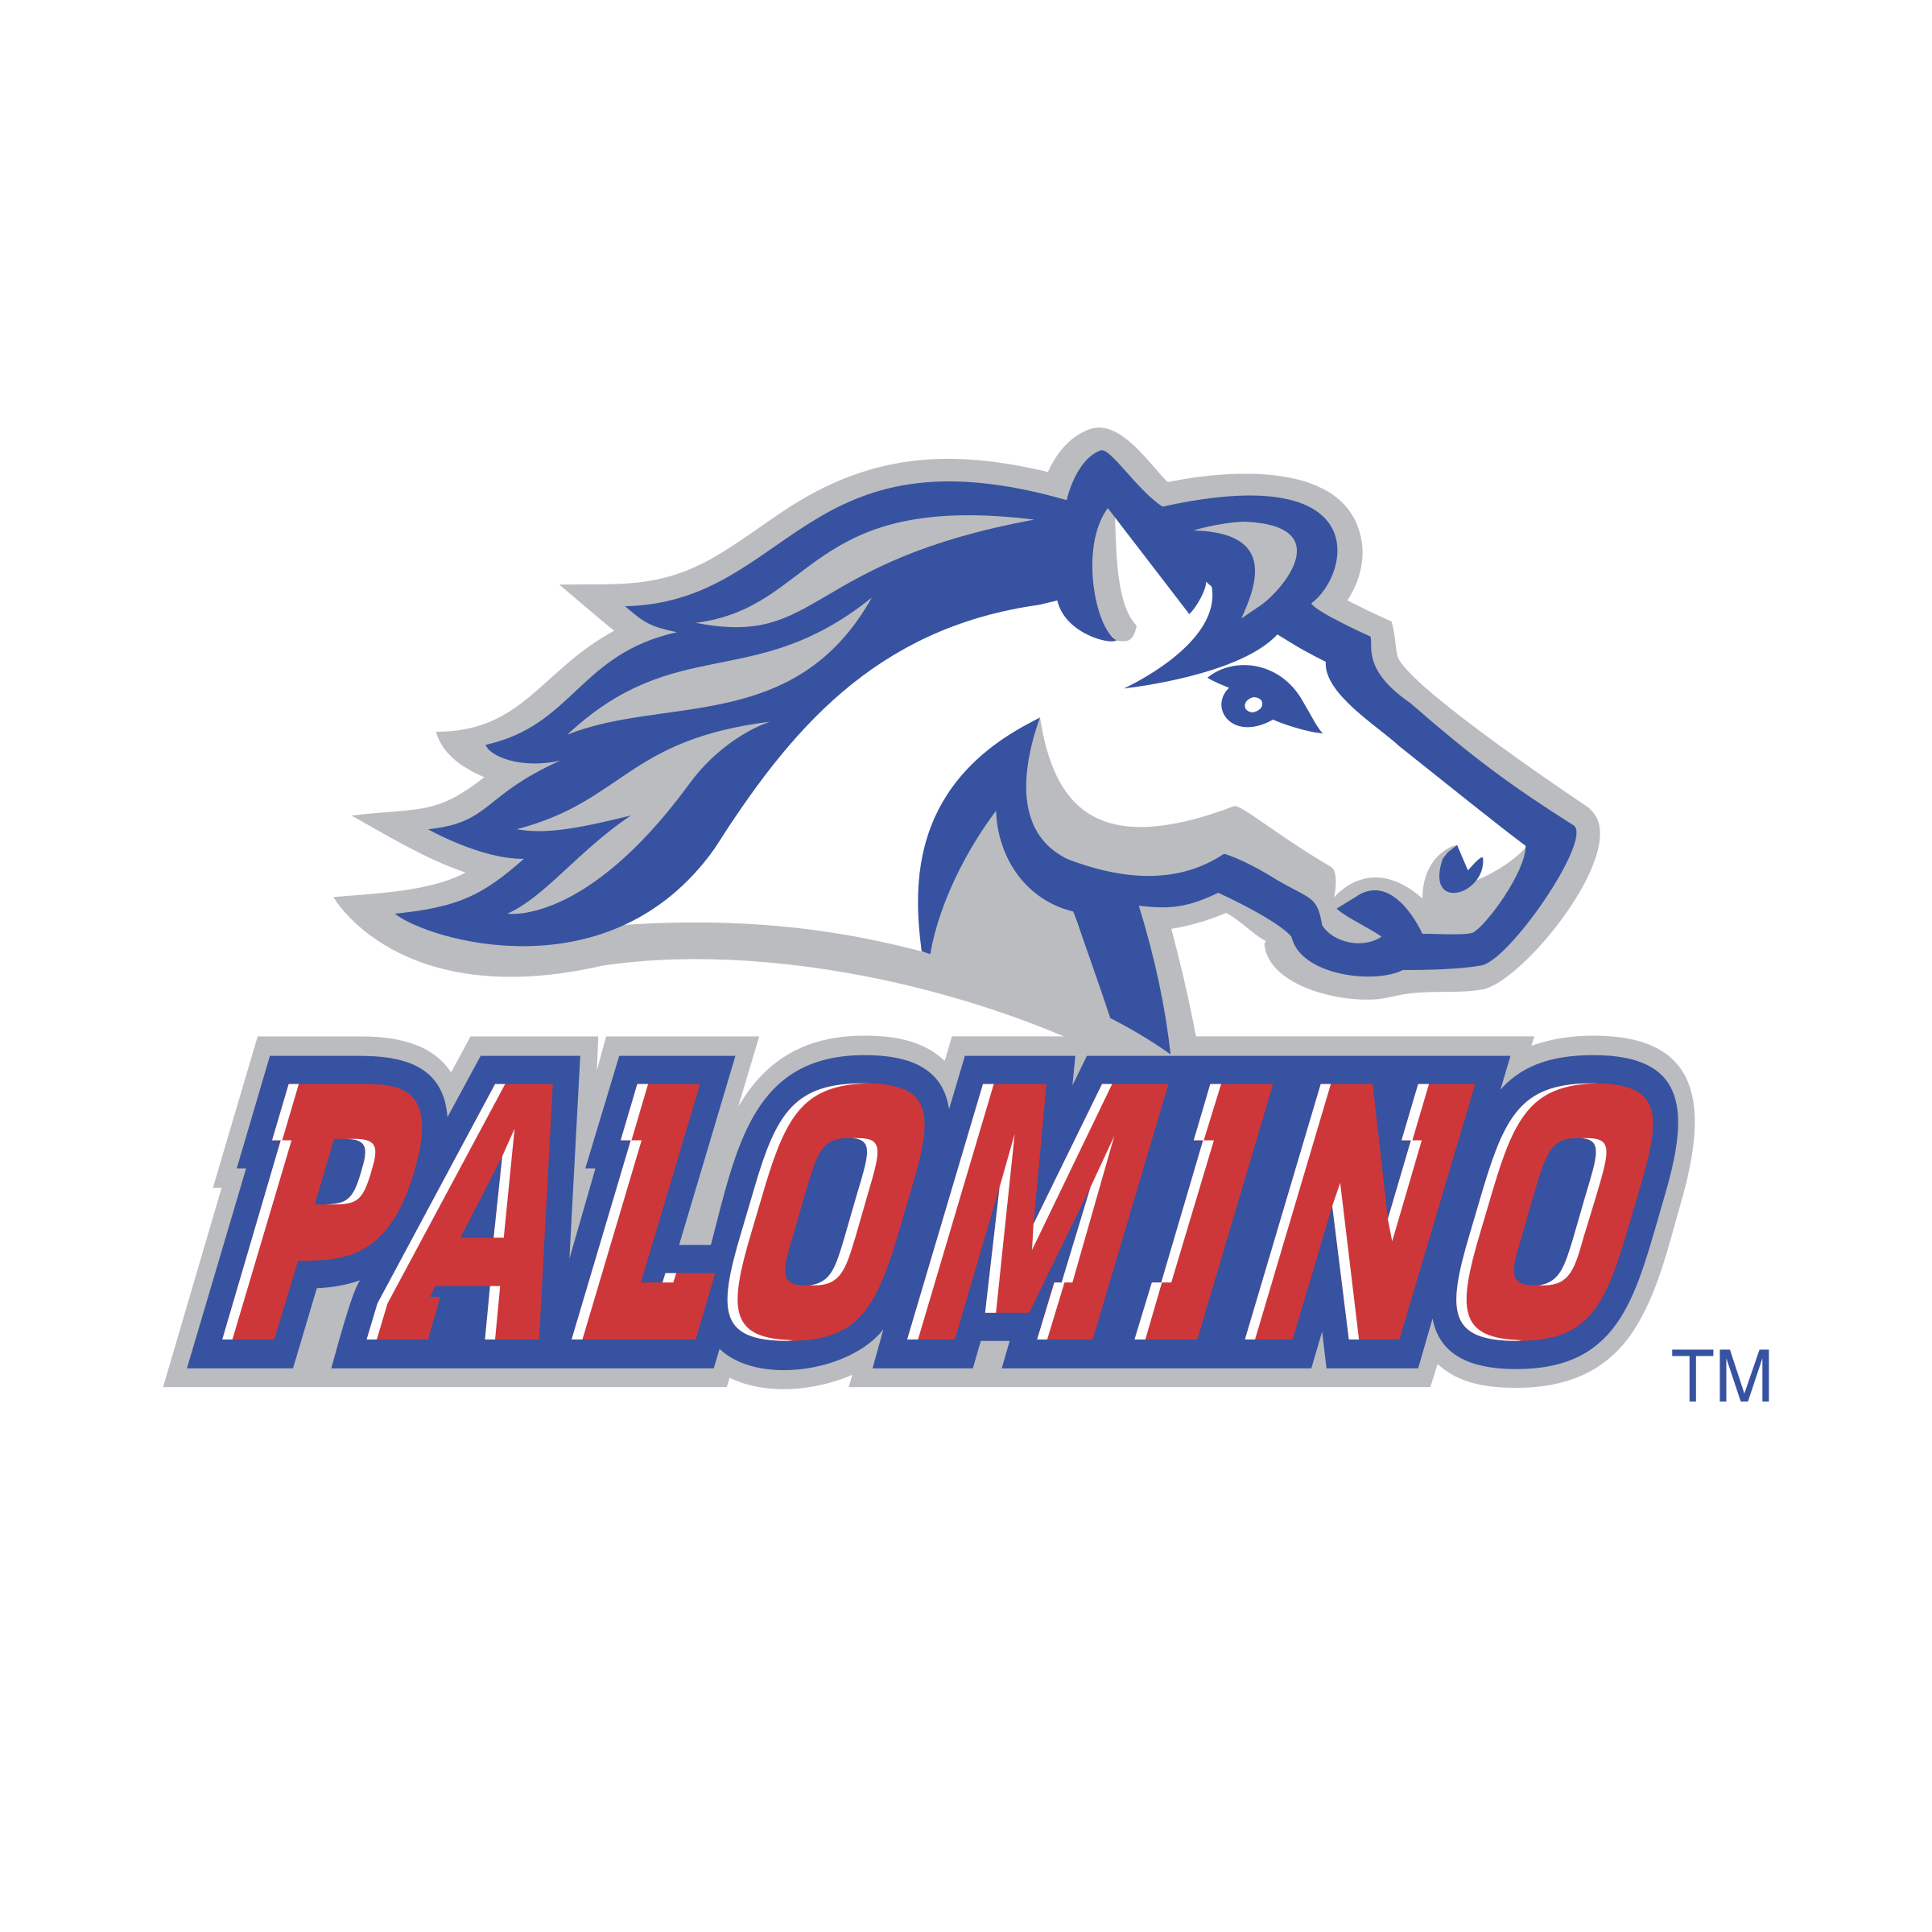 Palomino Logo - Palomino Logo PNG Transparent & SVG Vector - Freebie Supply